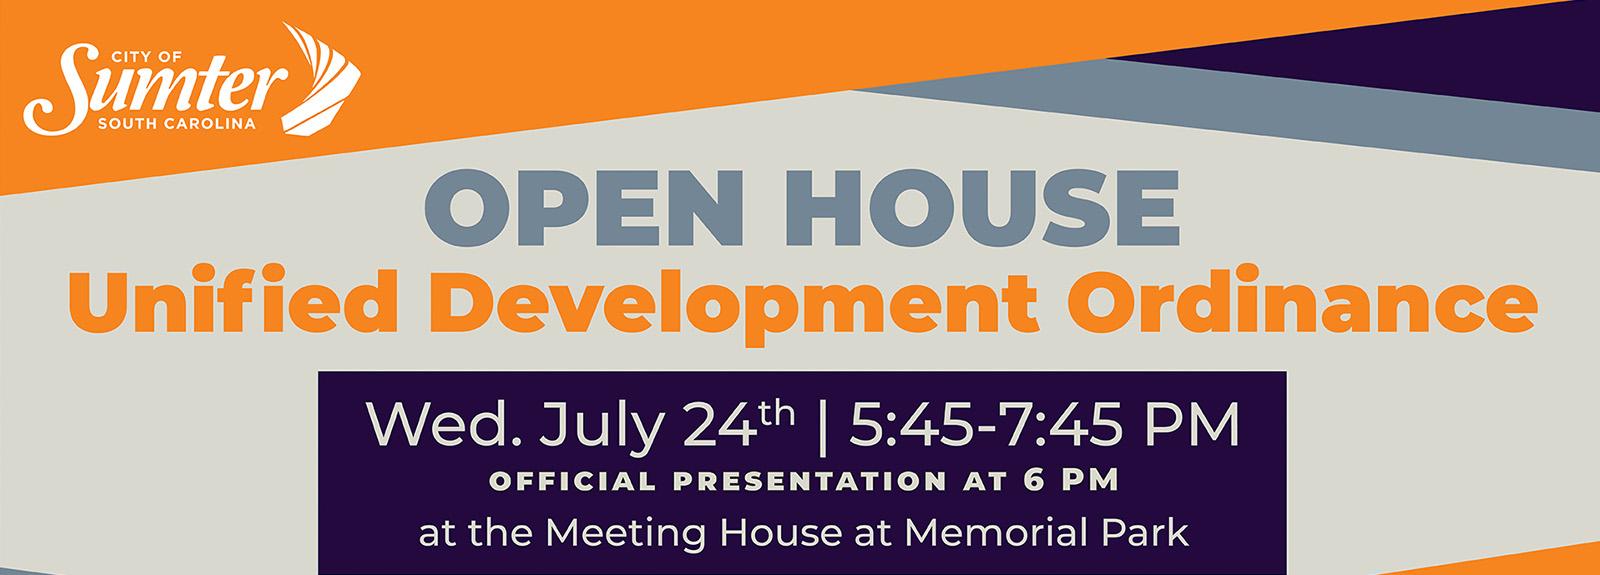 unified development ordinance open house flyer